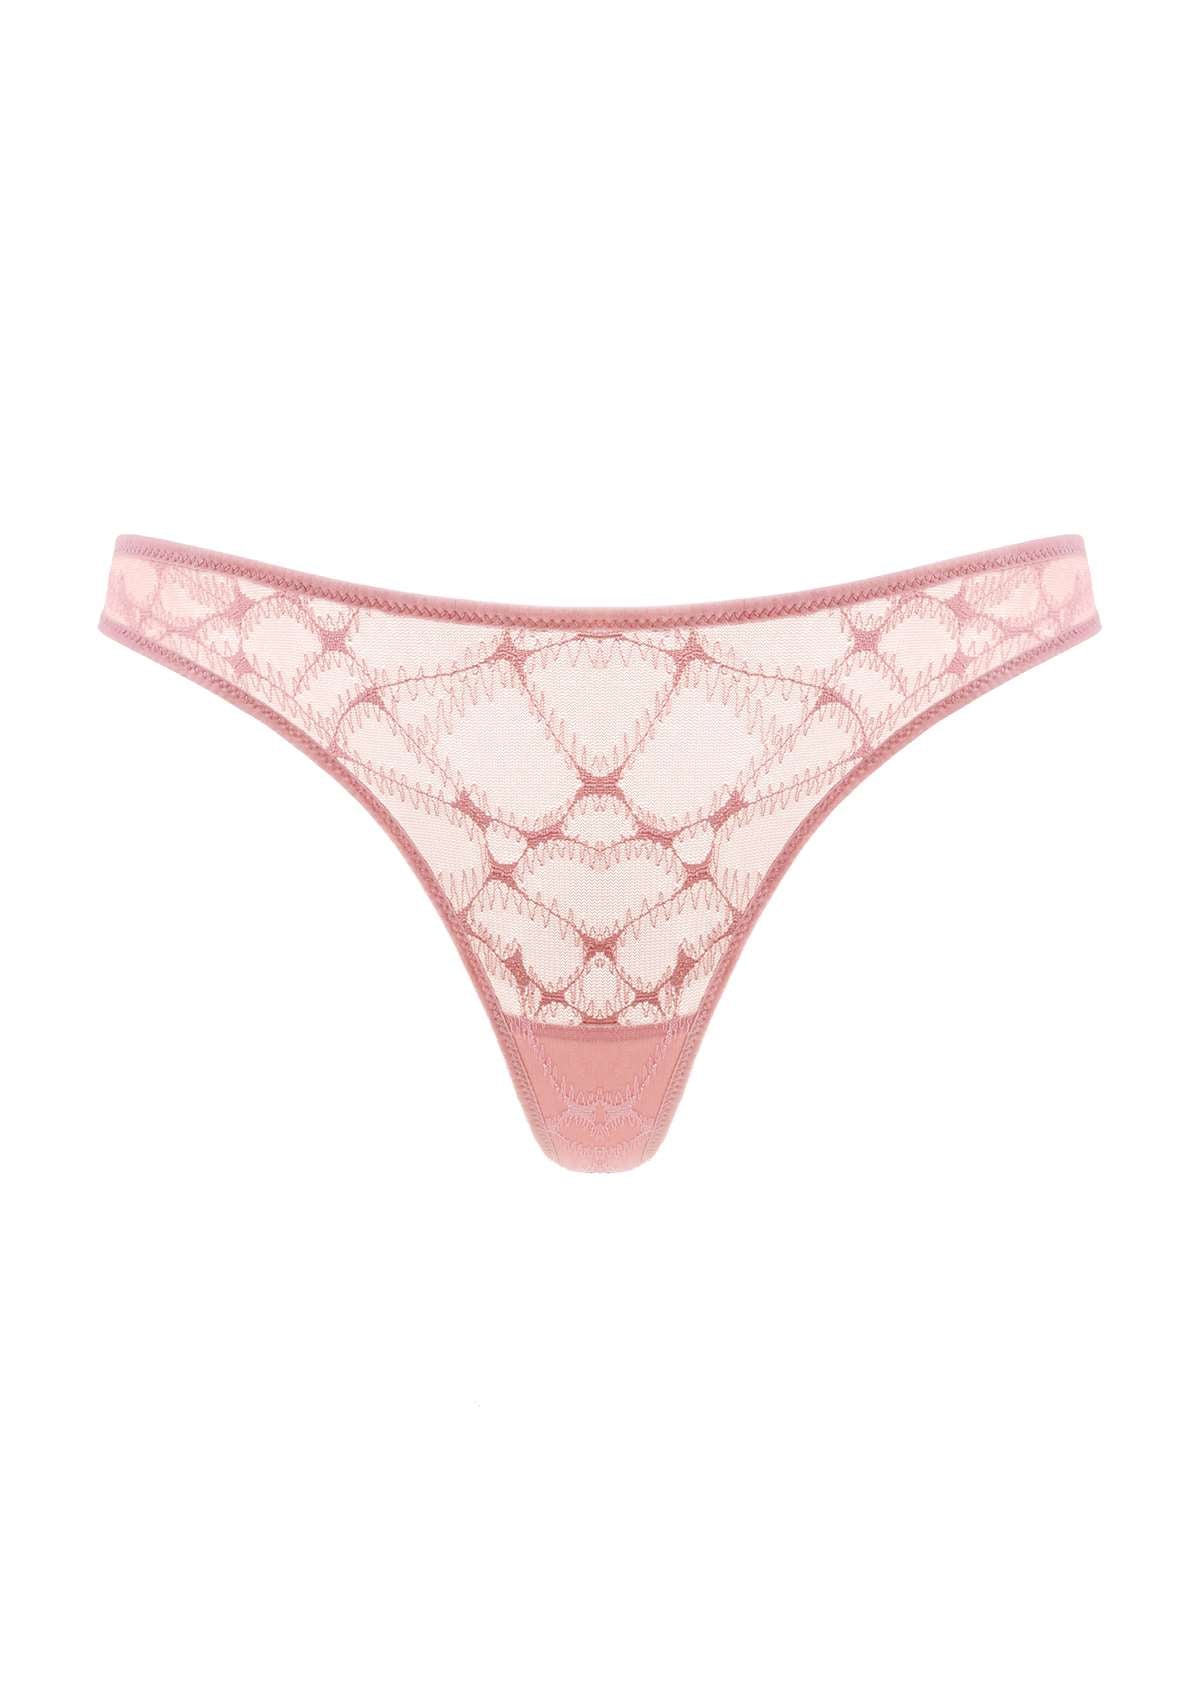 HSIA Soft Sexy Mesh Thong Underwear 3 Pack - XXL / Black+White+Light Coral